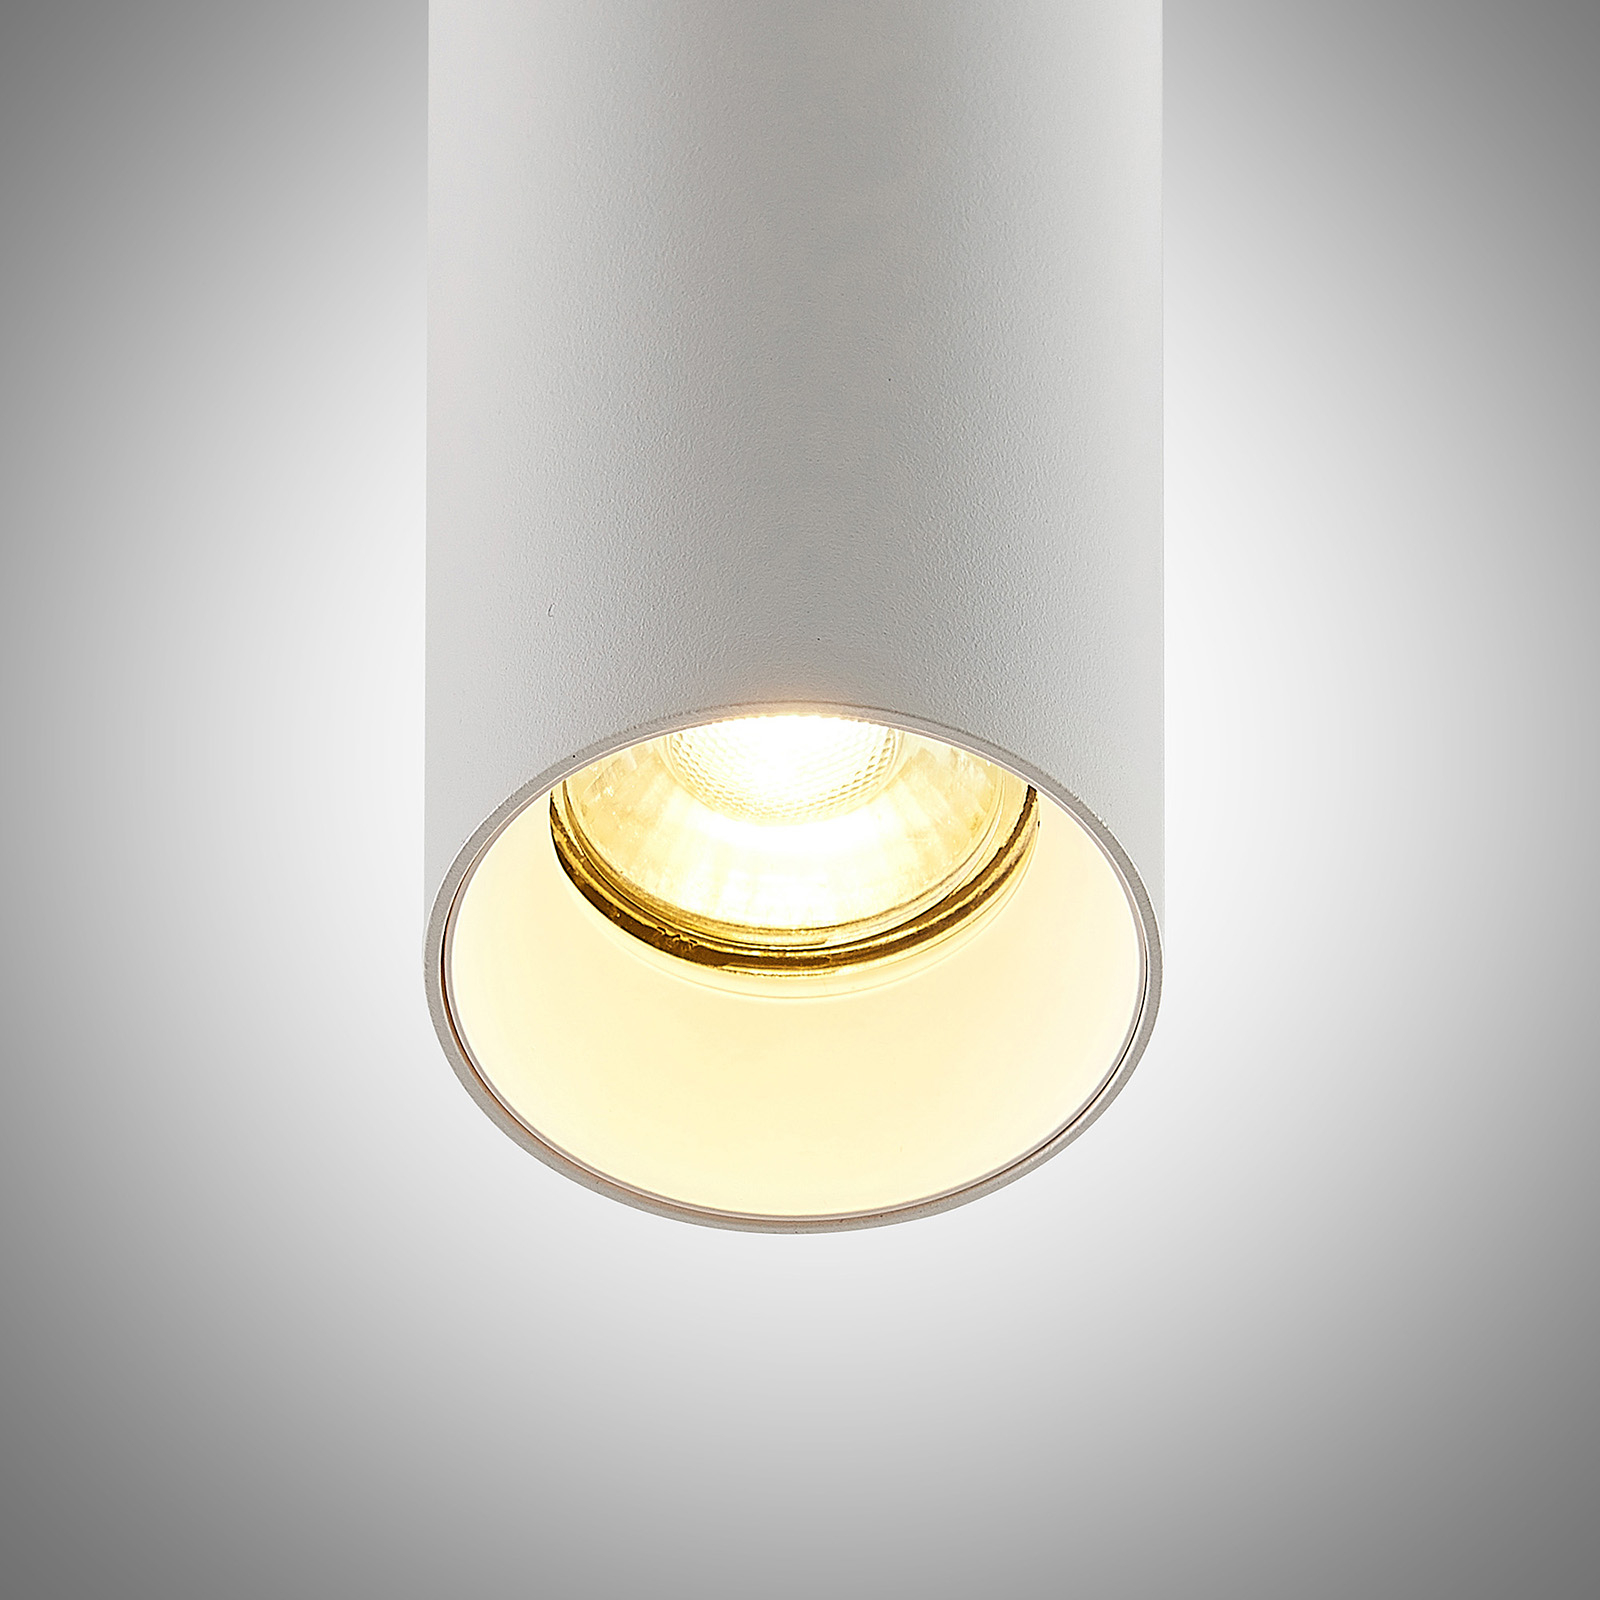 Arcchio Ejona pendant lamp, height 27 cm, white